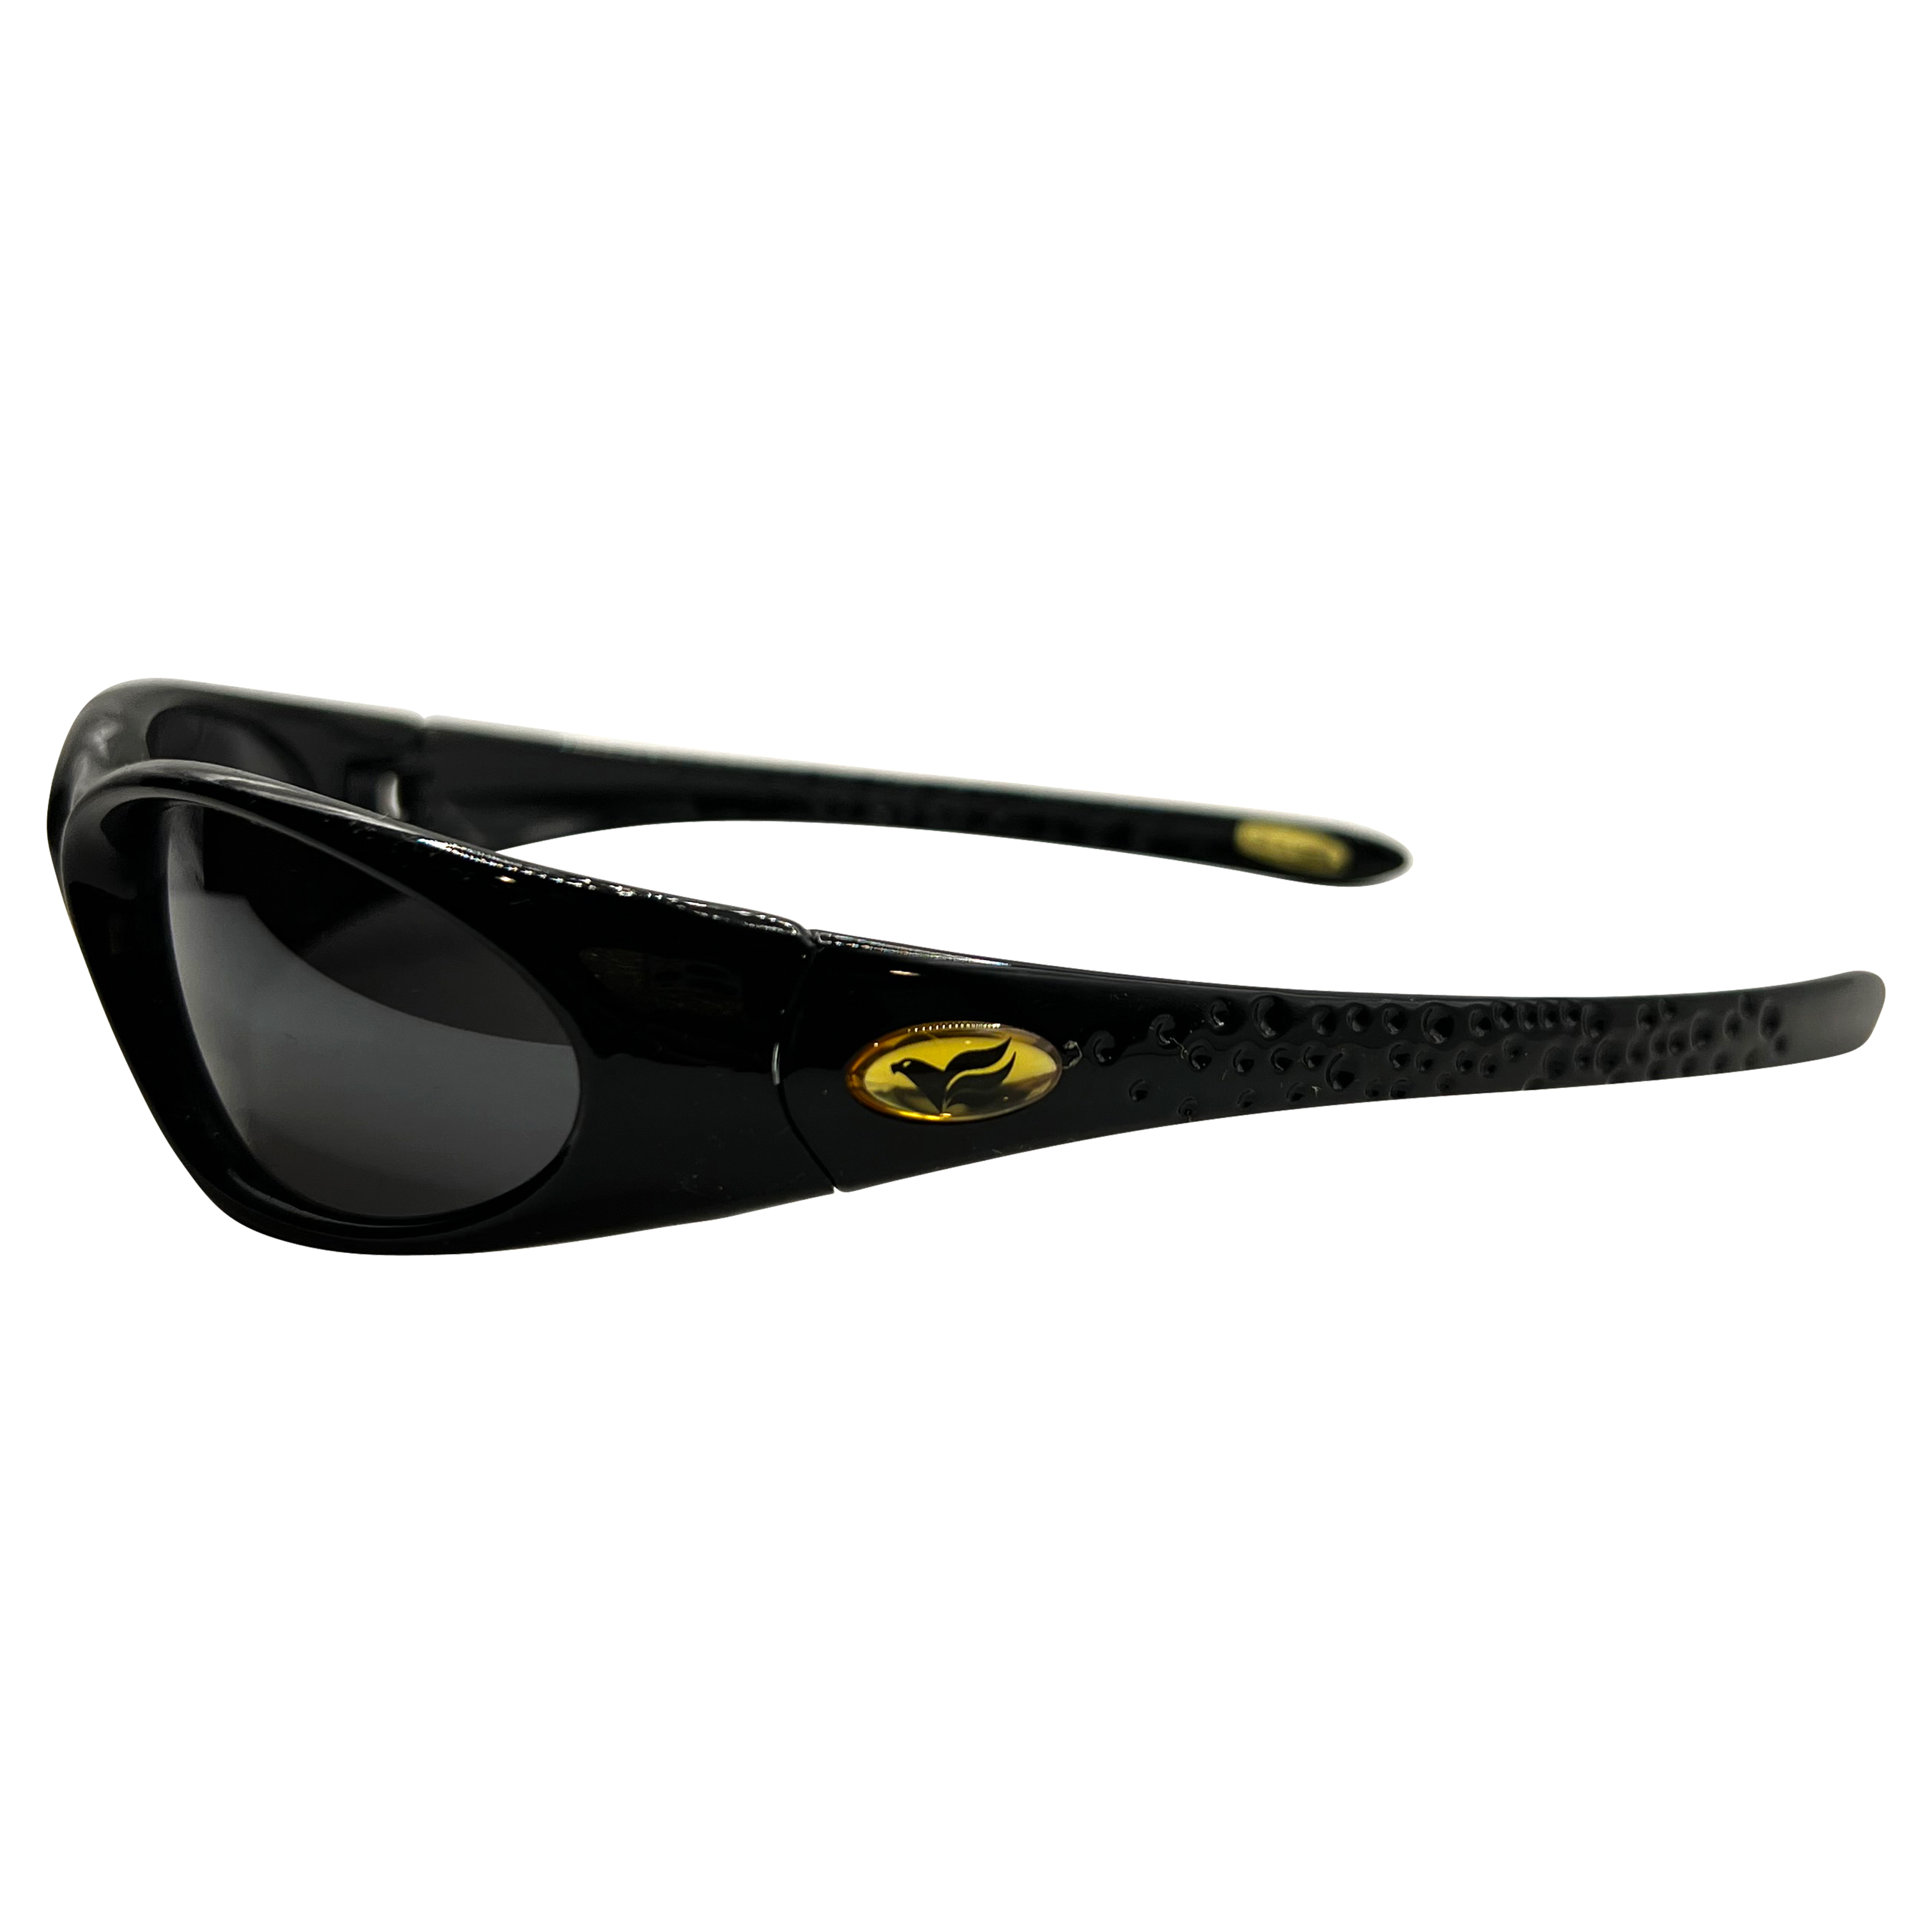 PAWPIN Black Sports Sunglasses